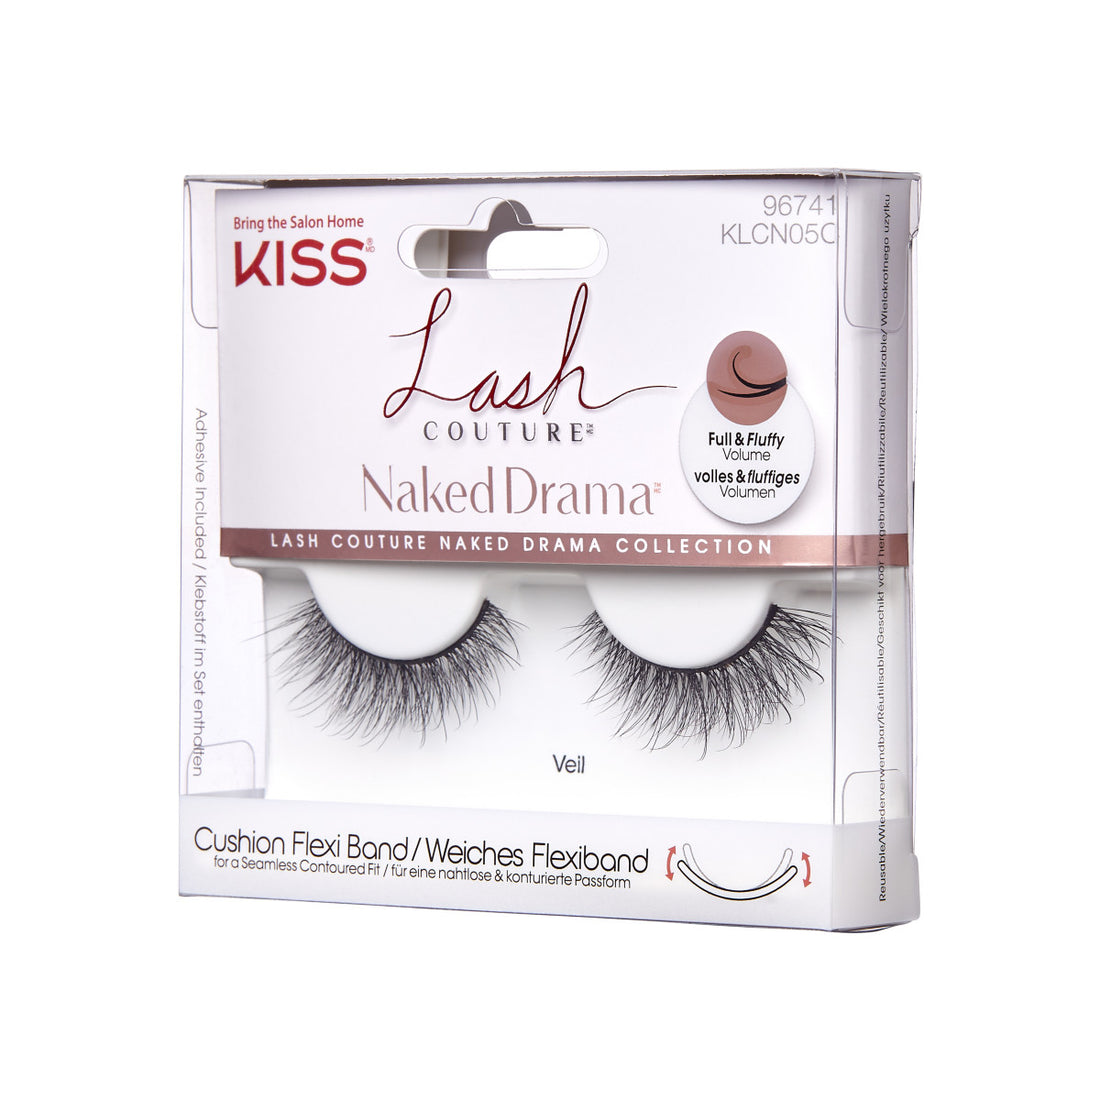 KISS Lash Couture Naked Drama False Strip Lashes, Style ‘Veil’ - 1 Pair